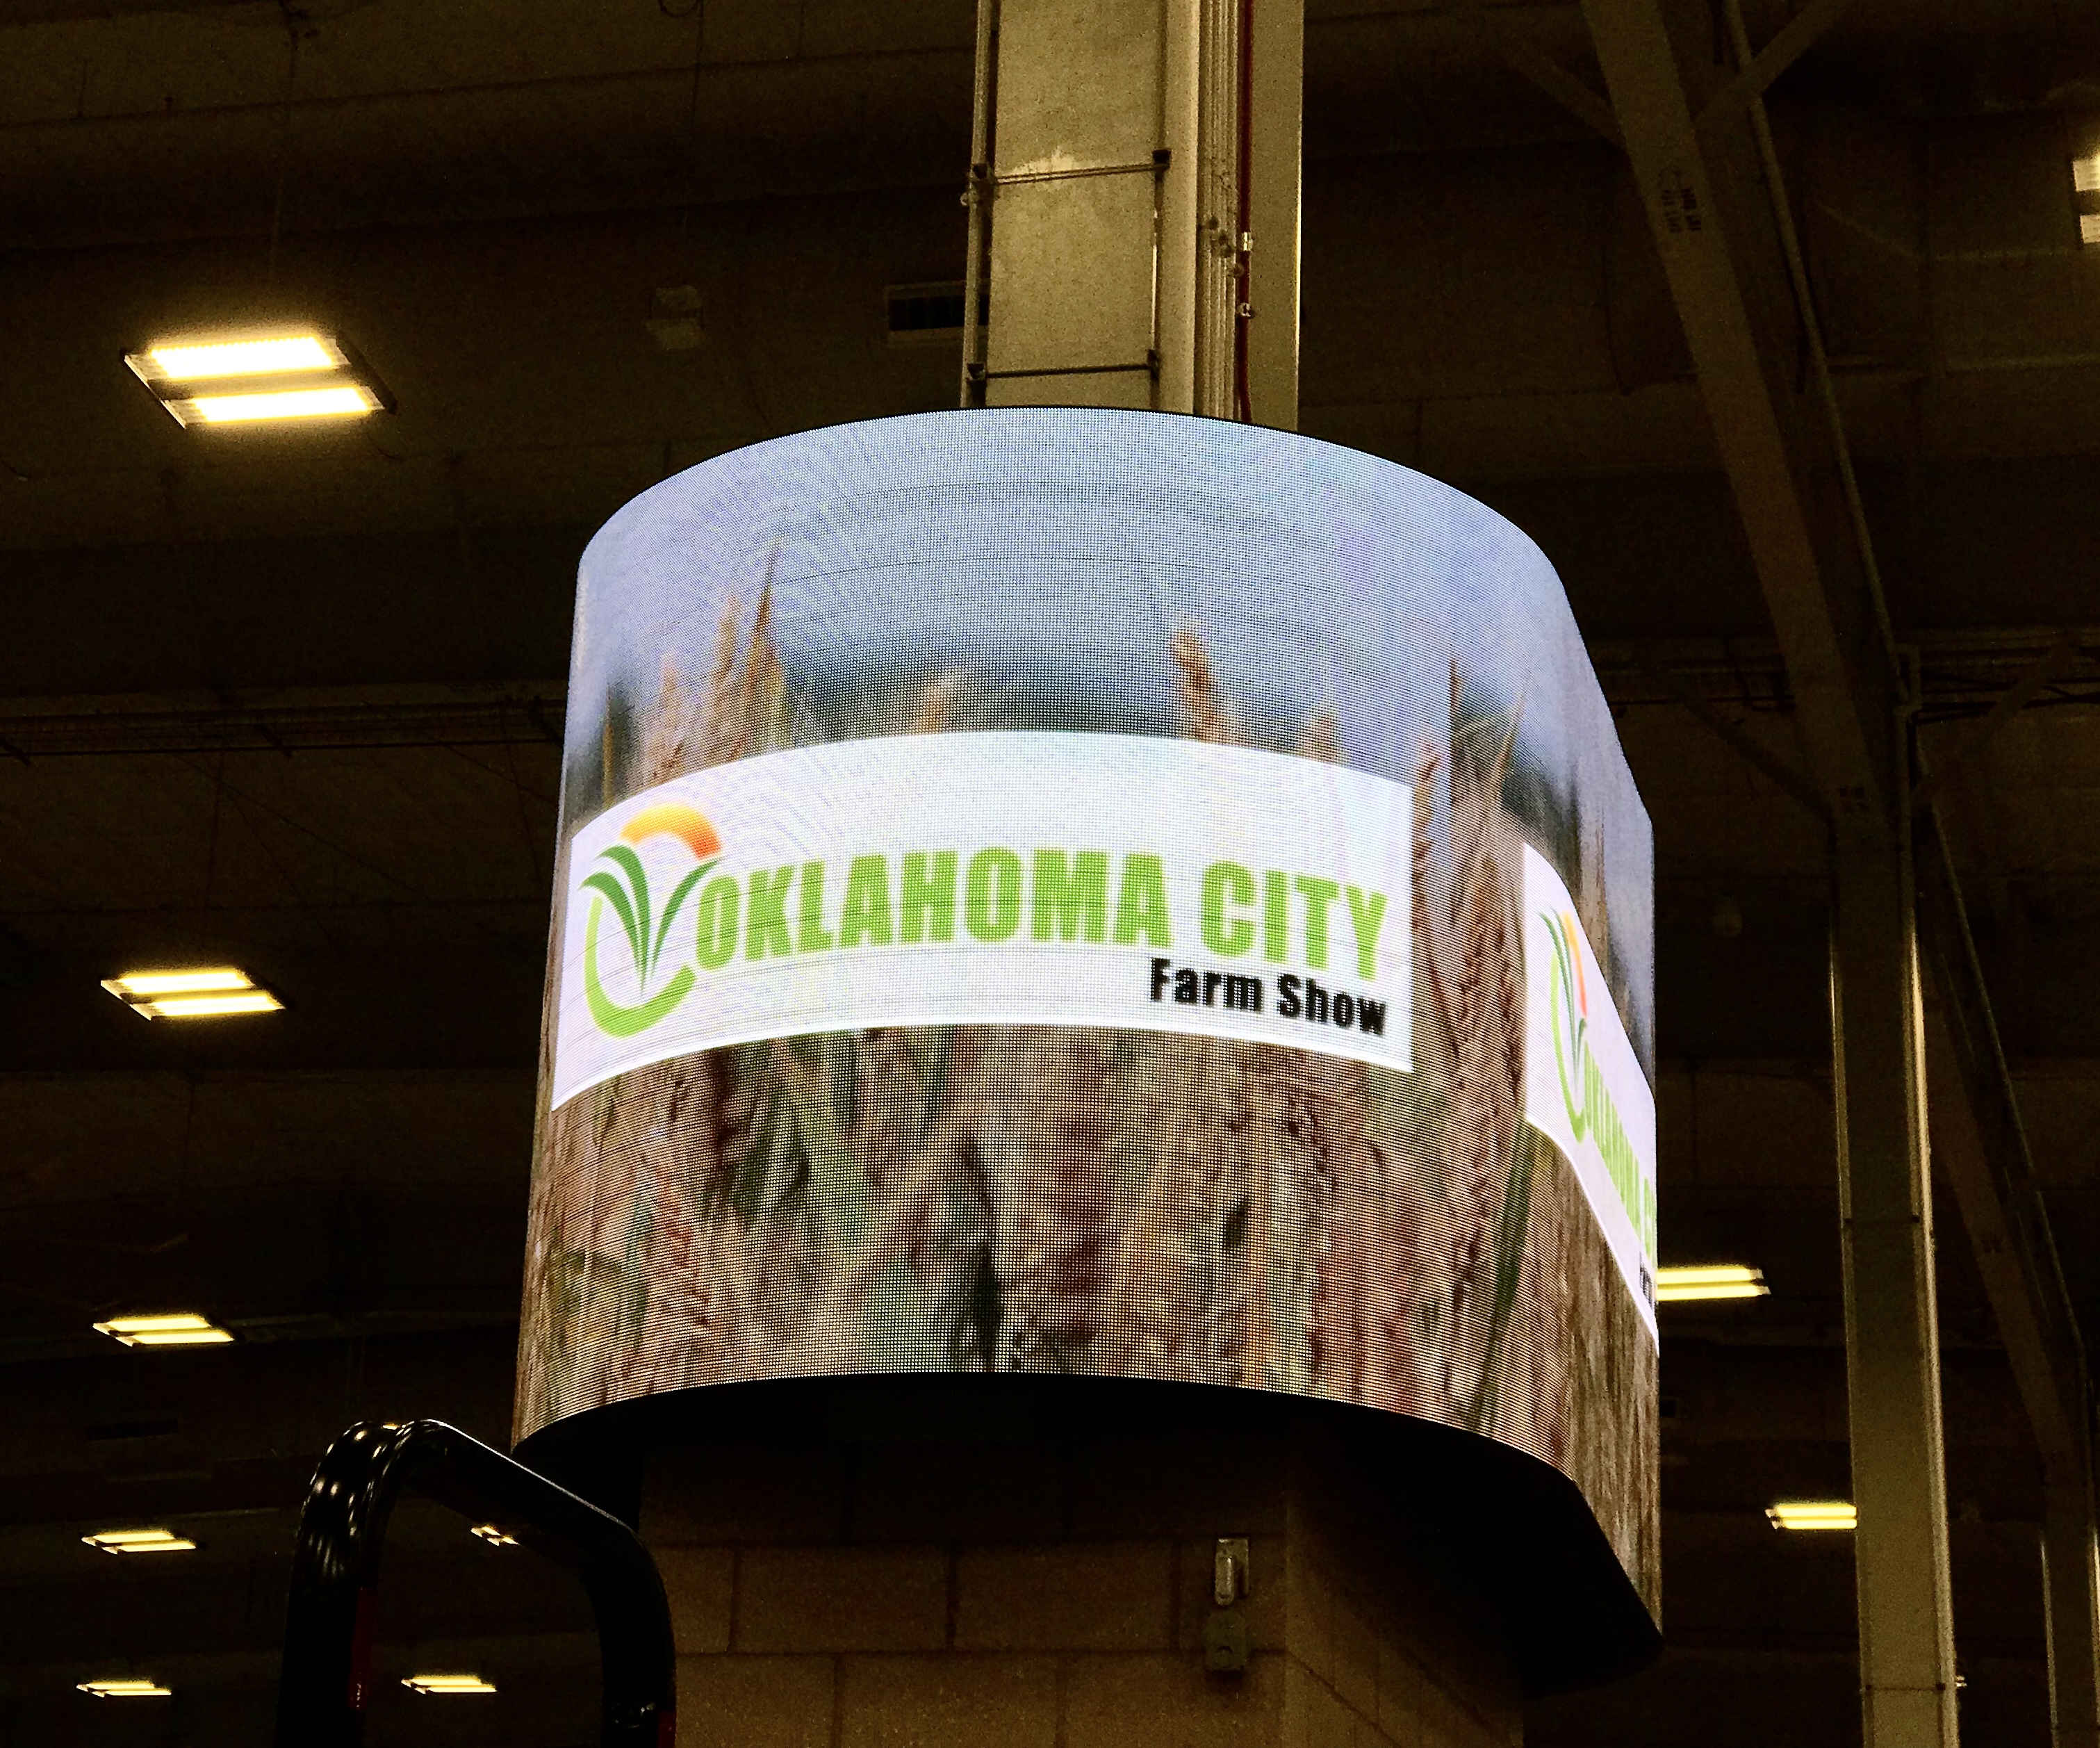 18th Annual Oklahoma City Farm Show Set to Open April 7th at the OKC Fairgrounds